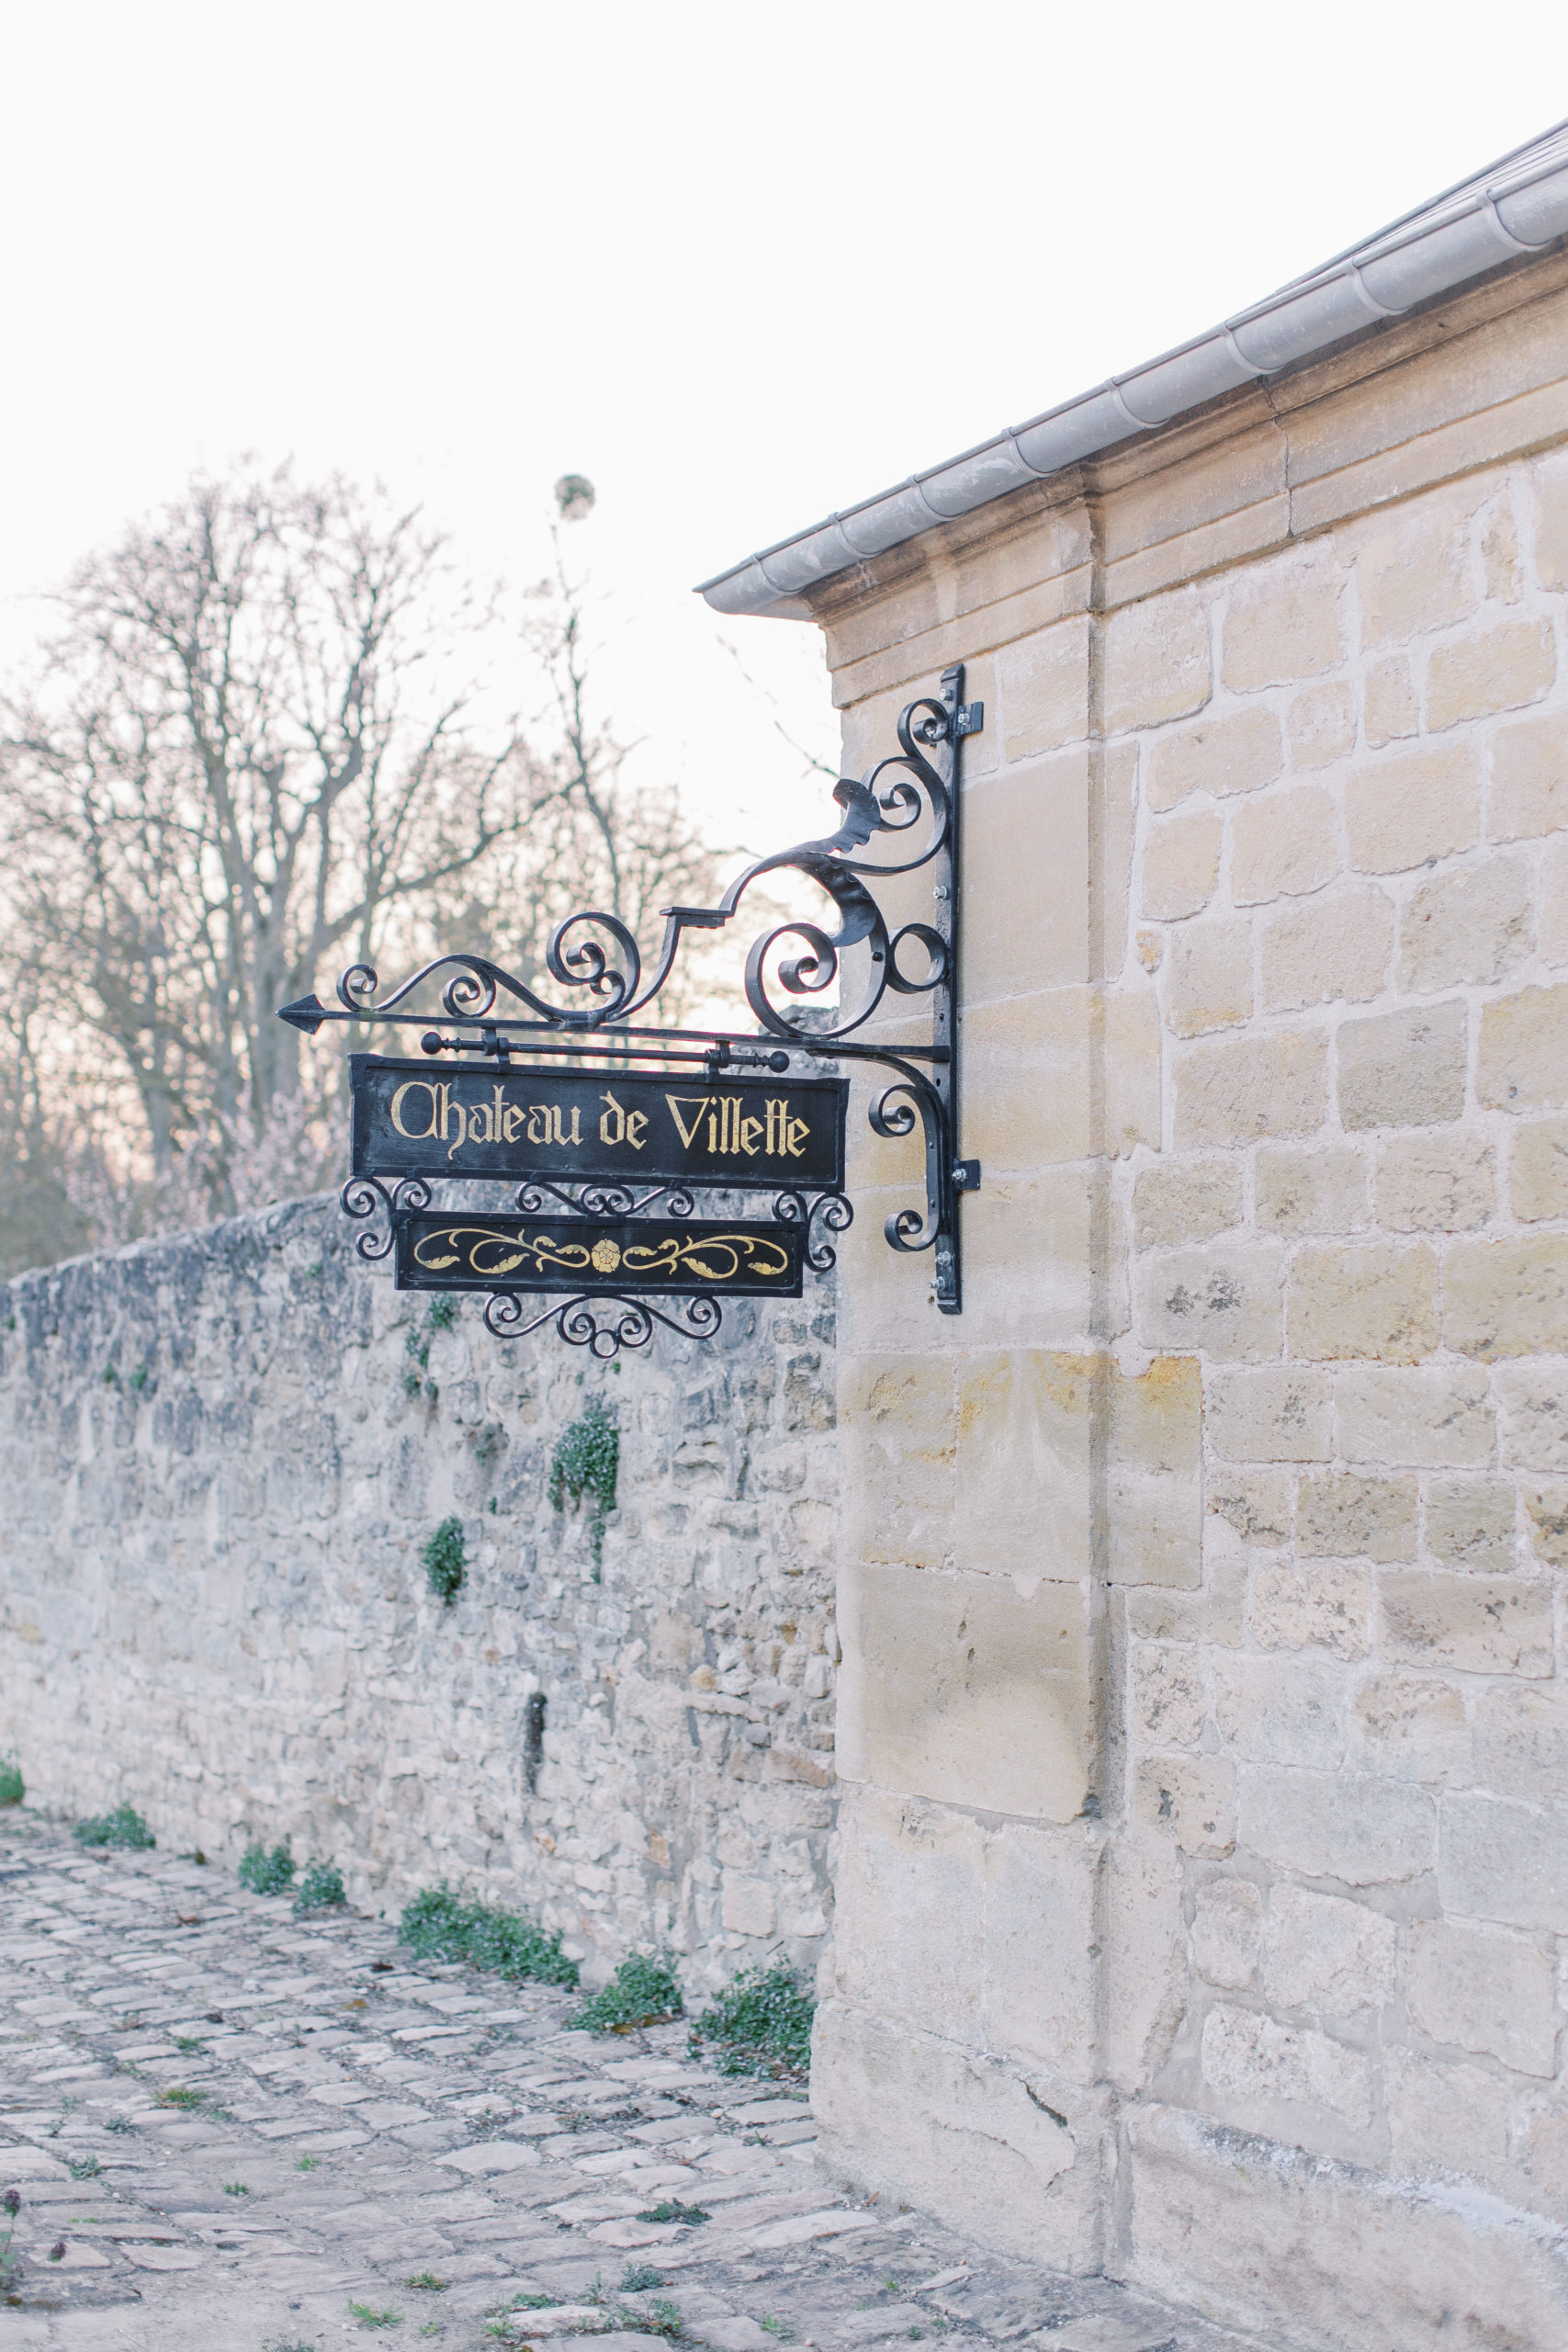 Chateau de Villete Wedding entrance sign and stone walls